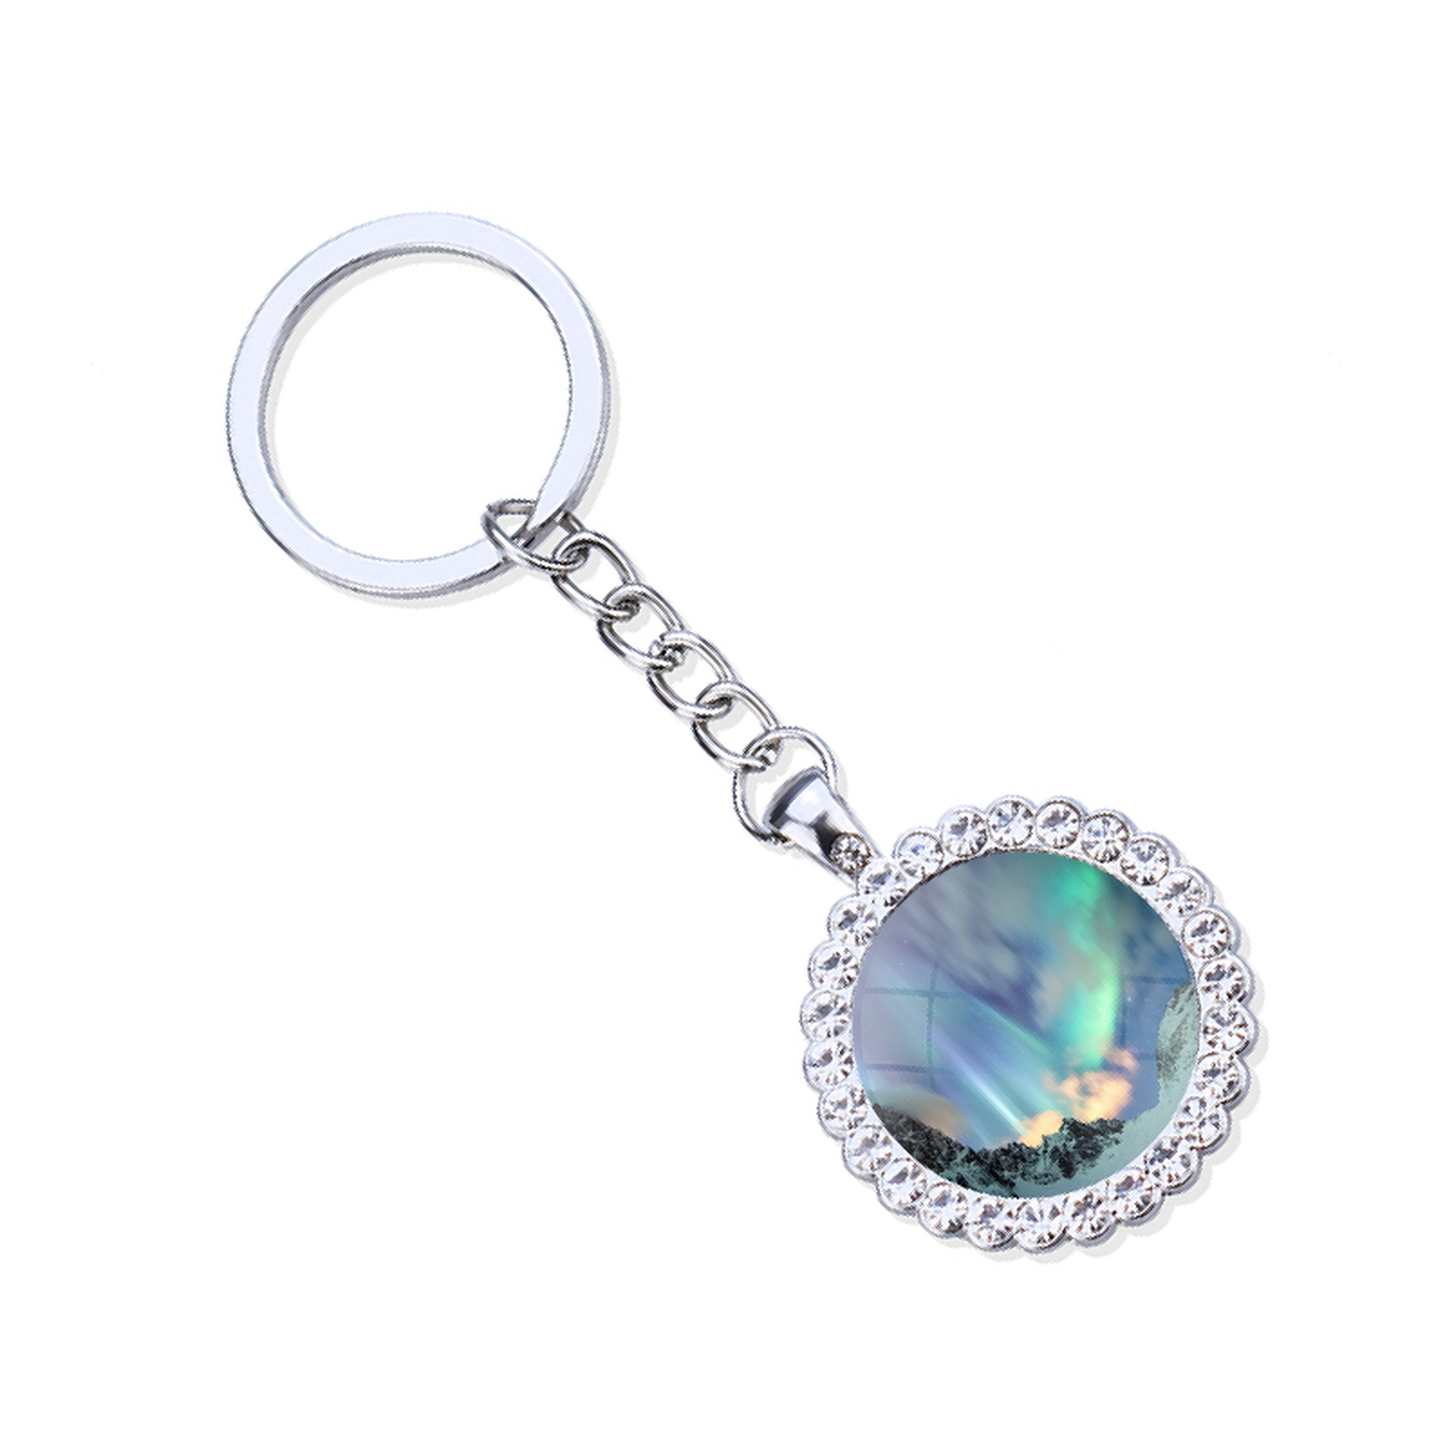 Aurora Borealis Silver Keyring - Northern Light Jewelry - Rhinestones Glass Key Chain - Perfect Aurora Lovers Gift 13